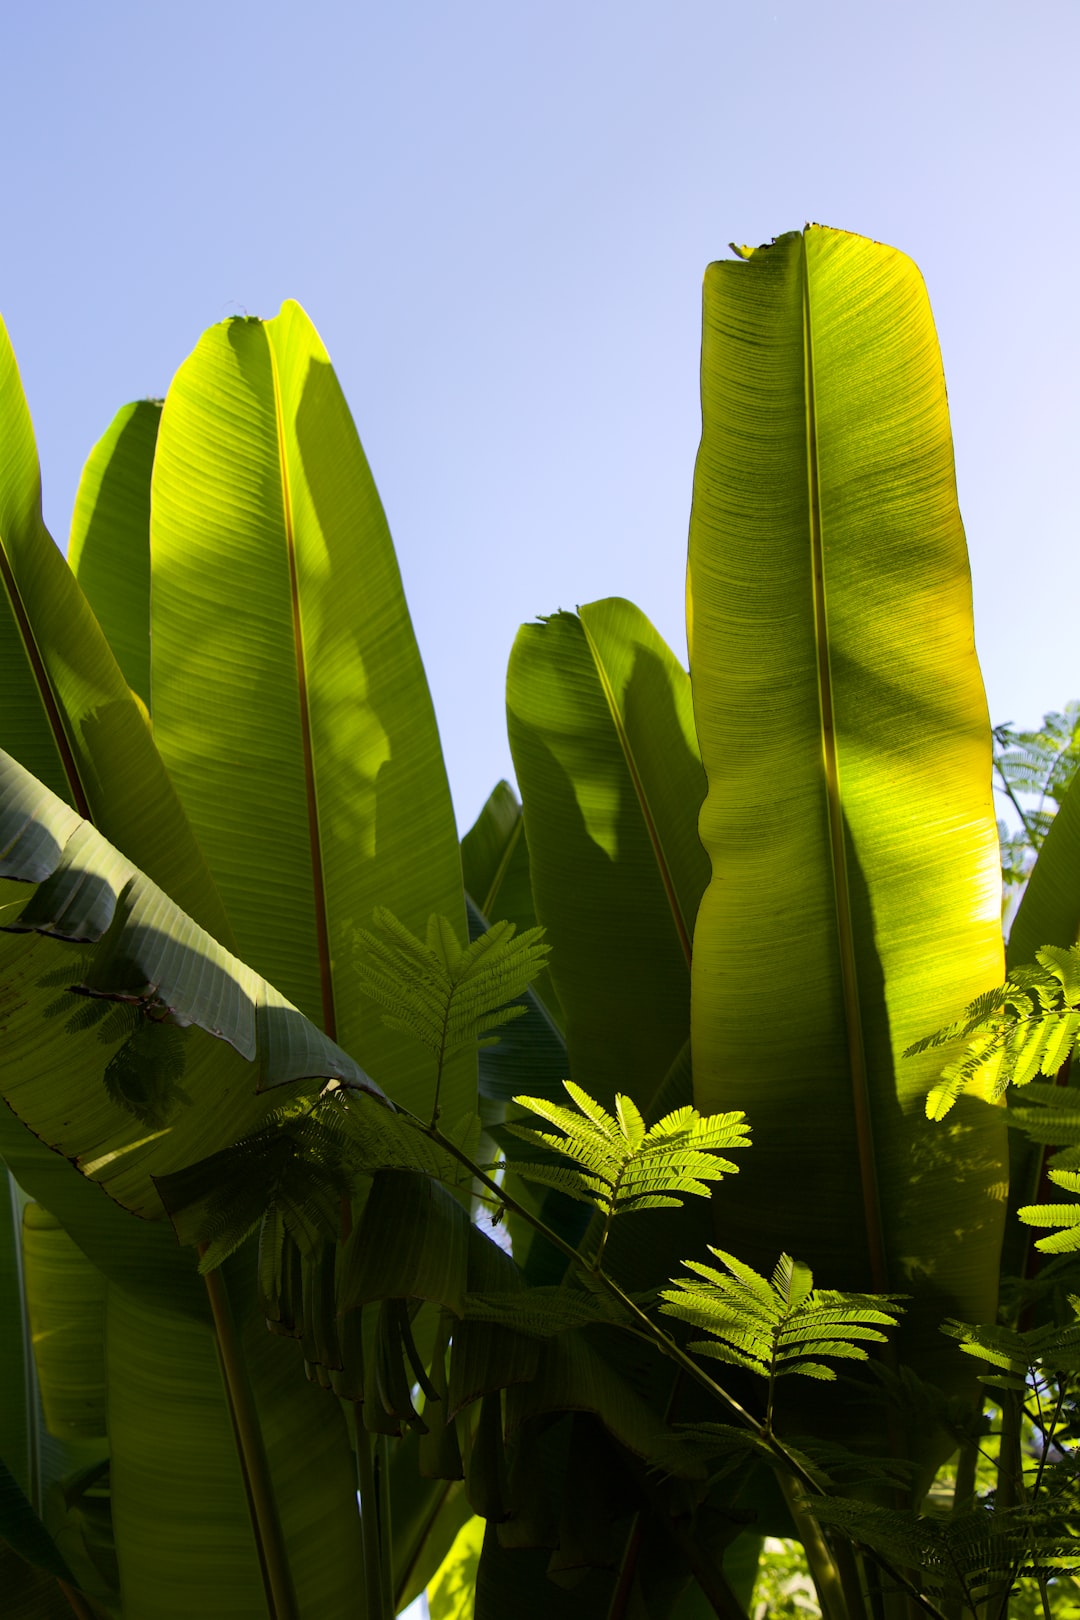 green banana tree under blue sky during daytime